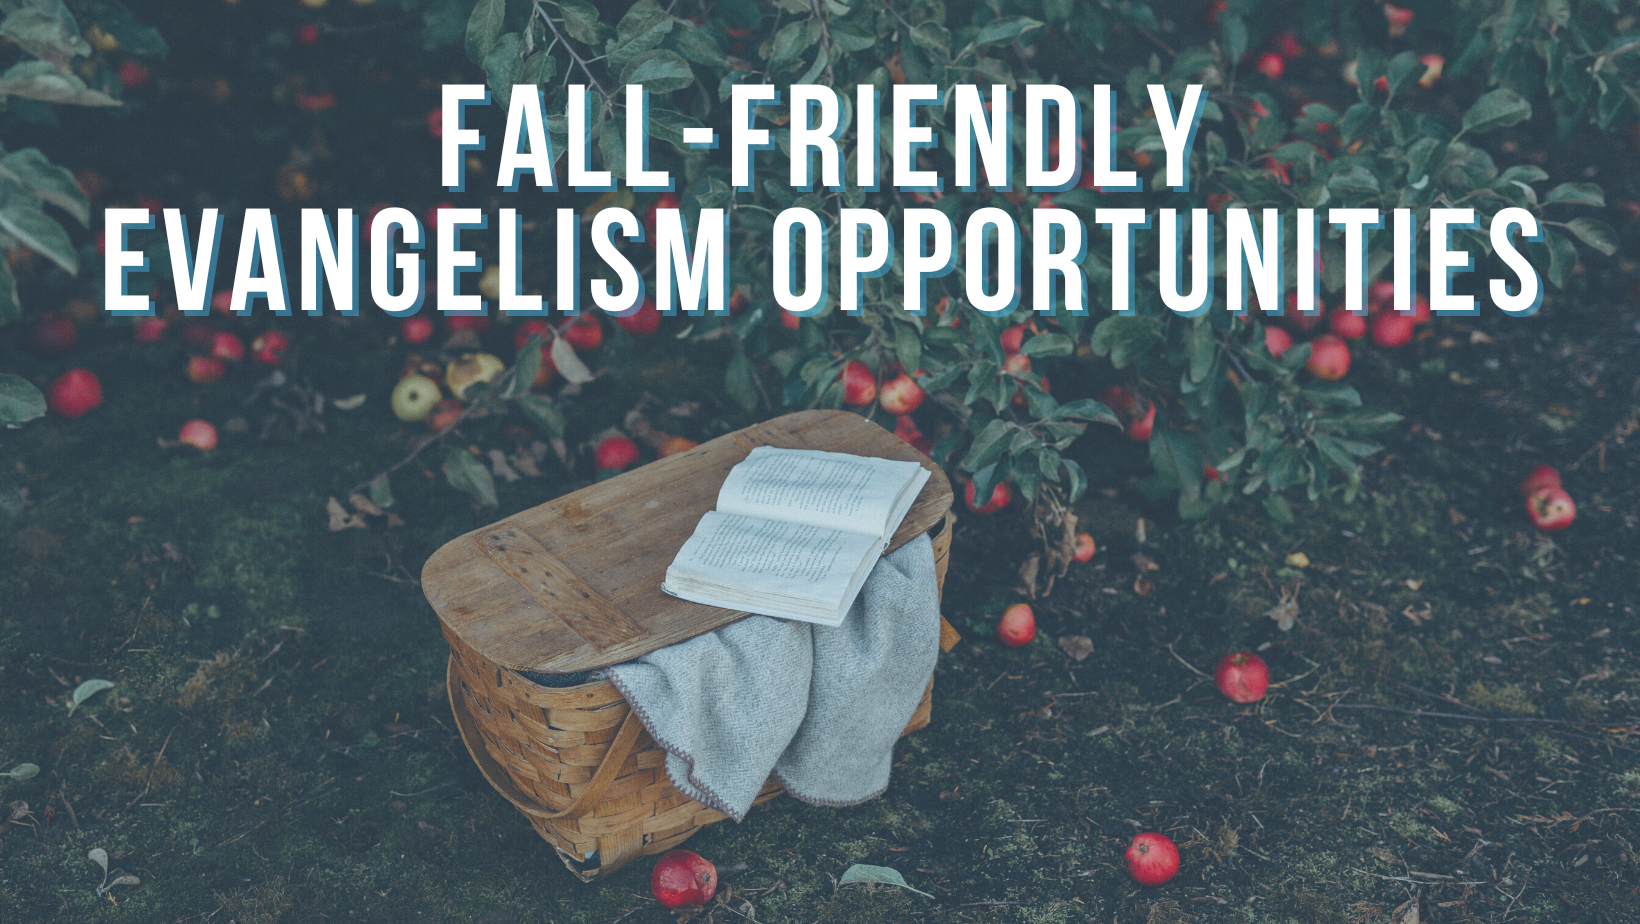 Fall-friendly evangelism opportunities